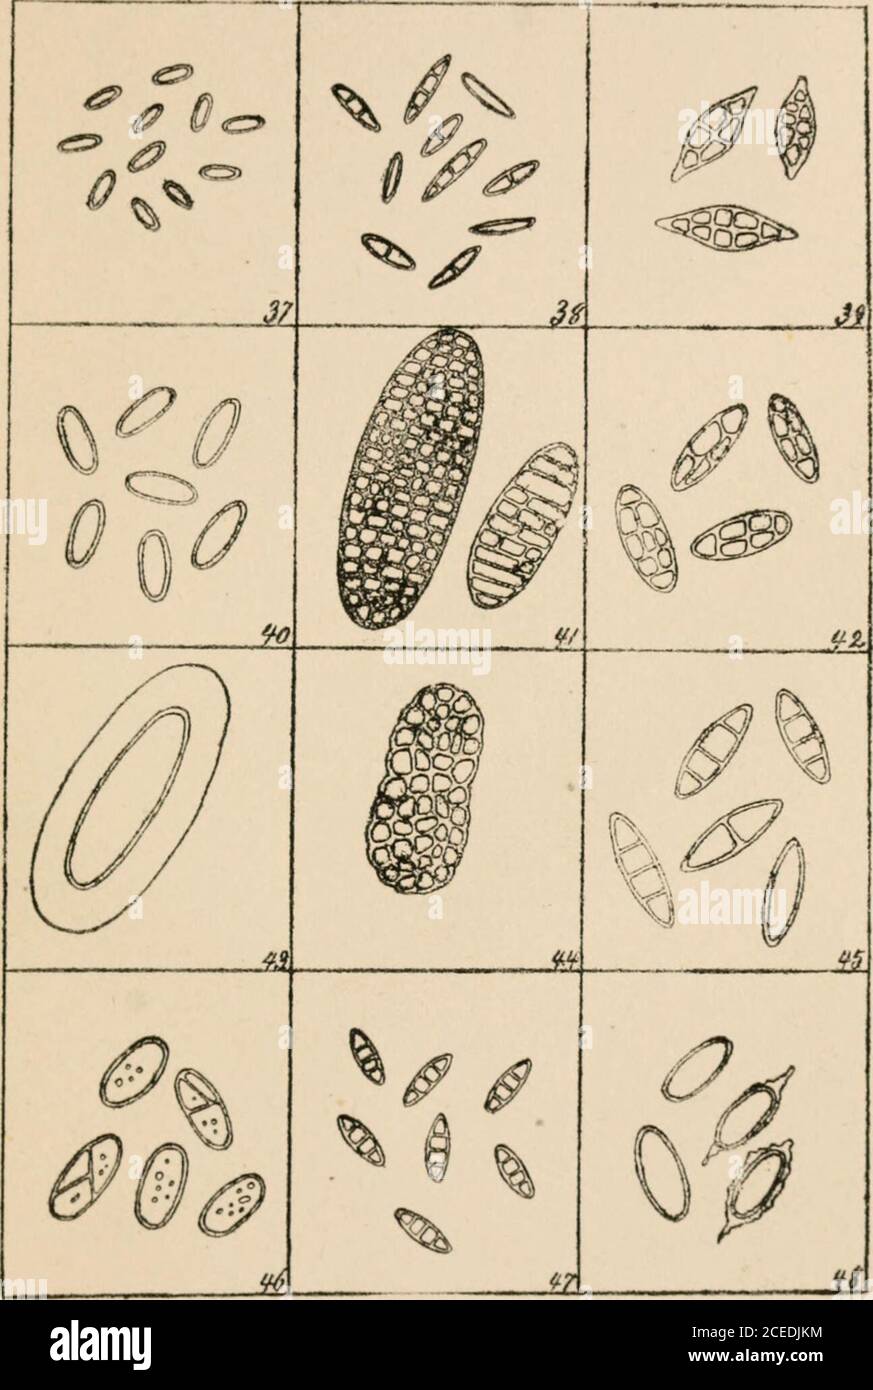 . A guide to the study of lichens. O 55 Jo SPORES. PLATE VIII. Generic Spore-types (con.). 37. Lecidea. 38. Lecothecium. 39. Leptogium. 40. Lichina. 41. Lopadium. 42. Mallotiuin. 43. Megalospora. 44. Mycoporum. 45. Nephromium. 46. Omphalaria. 47. Opegrapha. 48. Pannaria. GUIDE TO LfrHENS. Schneider.. Flatc Vin. S FOXES. PLATE IX. Generic Spore-types (con.)= 49. Parmelia. 50. Peltigera. 51. Pertusaria.62. Physcia.5.3. Pilophoron. 54. Placodium. 55. Polychidiuni. 56. Psora.57! Psoroma. 58. Pyrenula. 59. Pyxine. 60. Ramalina. GUIDE TO LICHENS Schneider. Plate rX Stock Photo